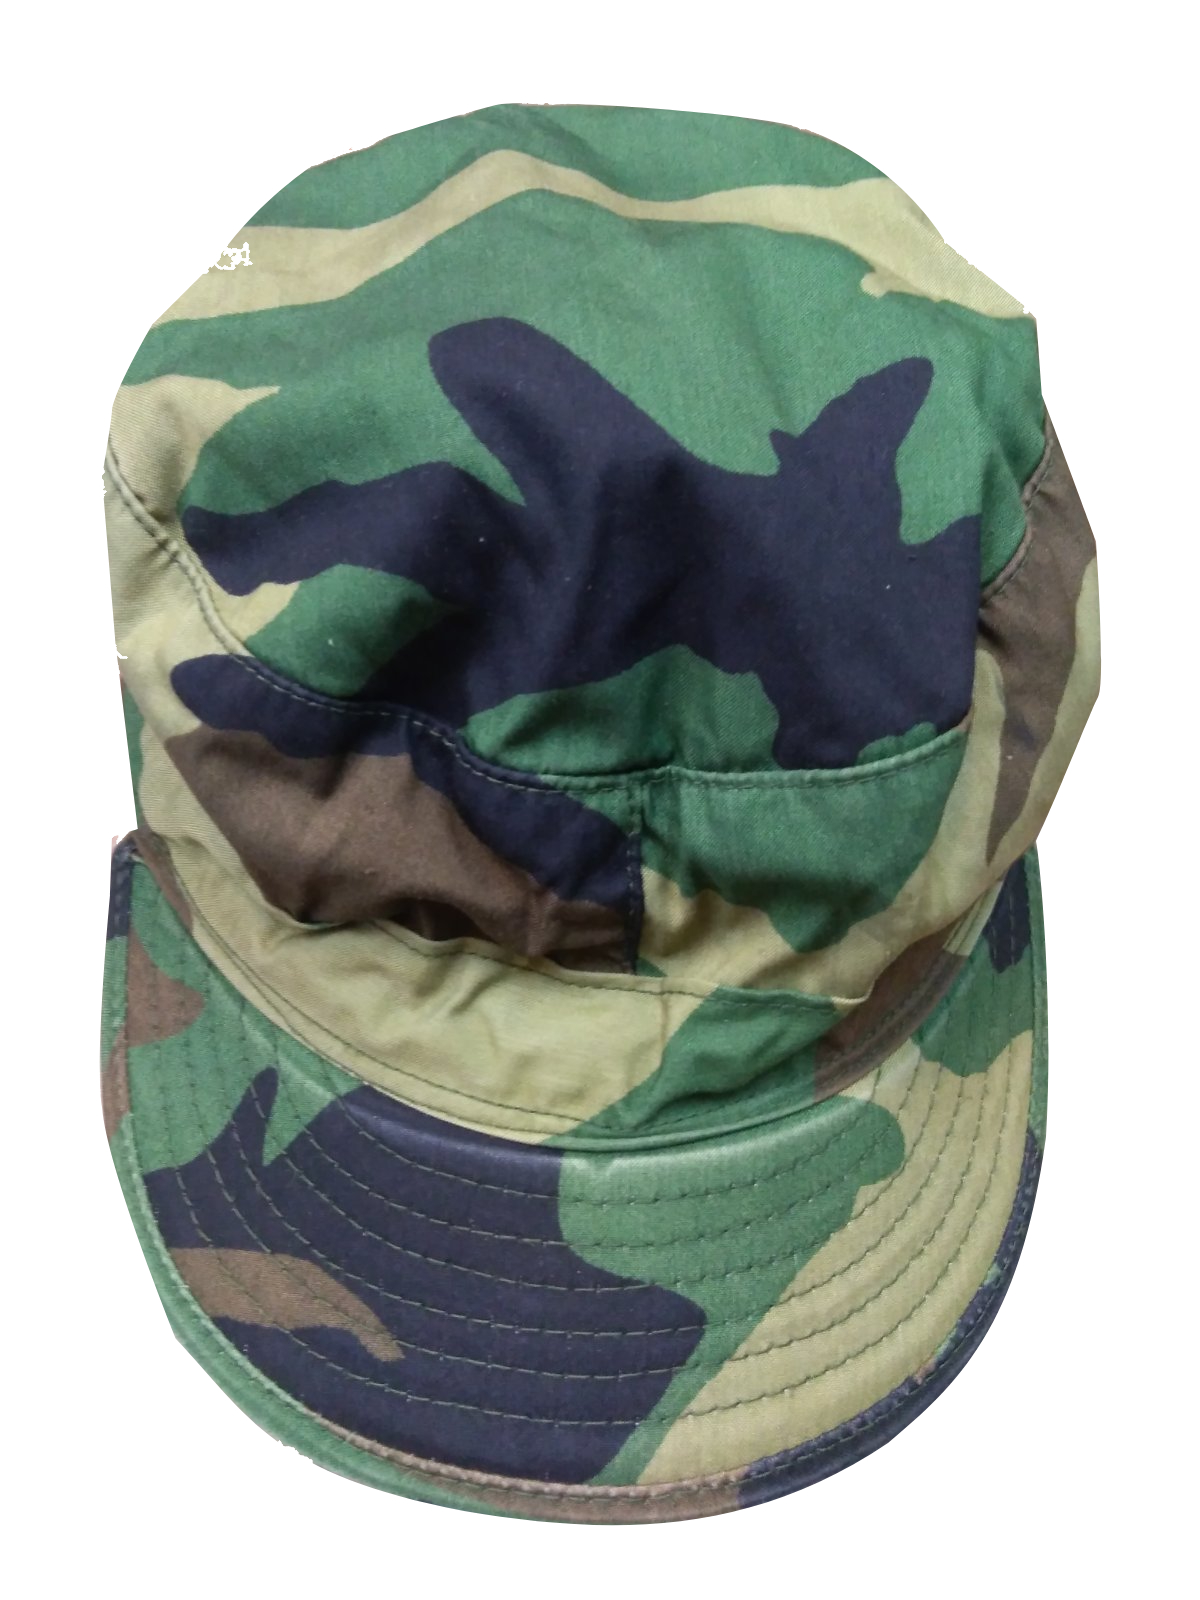 Nón quân đội Cap, Hot Weather, OG-507 Size:7 3/8